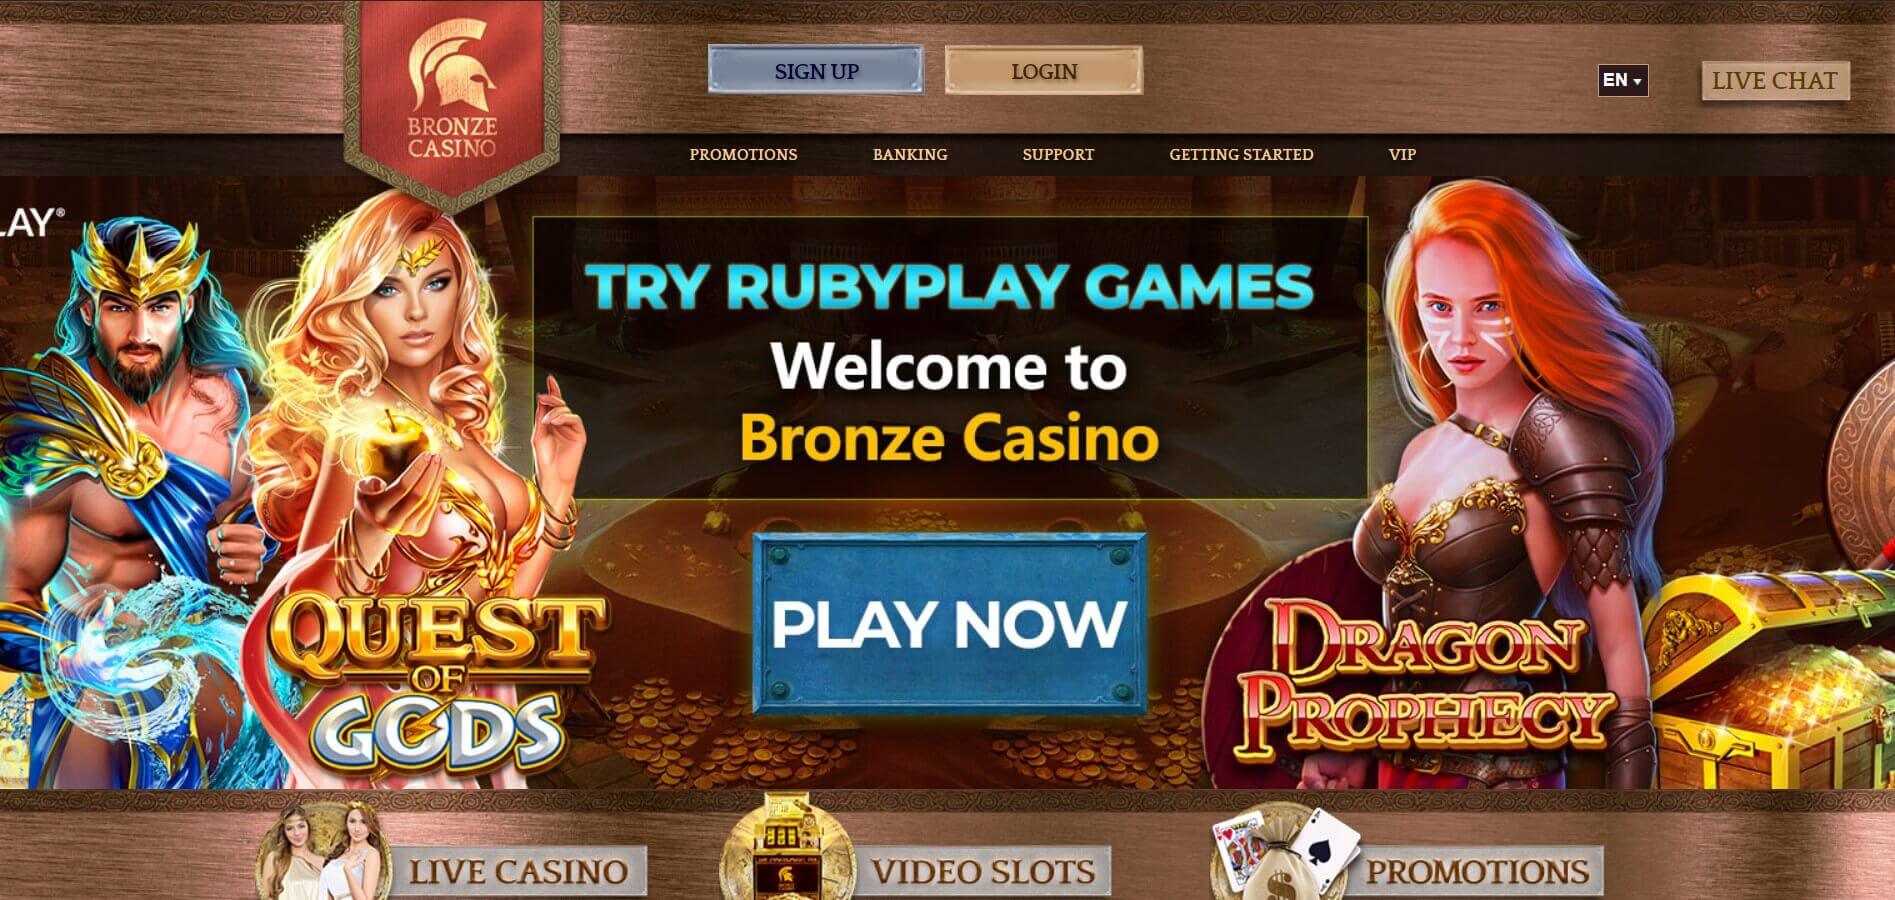 Bronze Casino Rubyplay Games